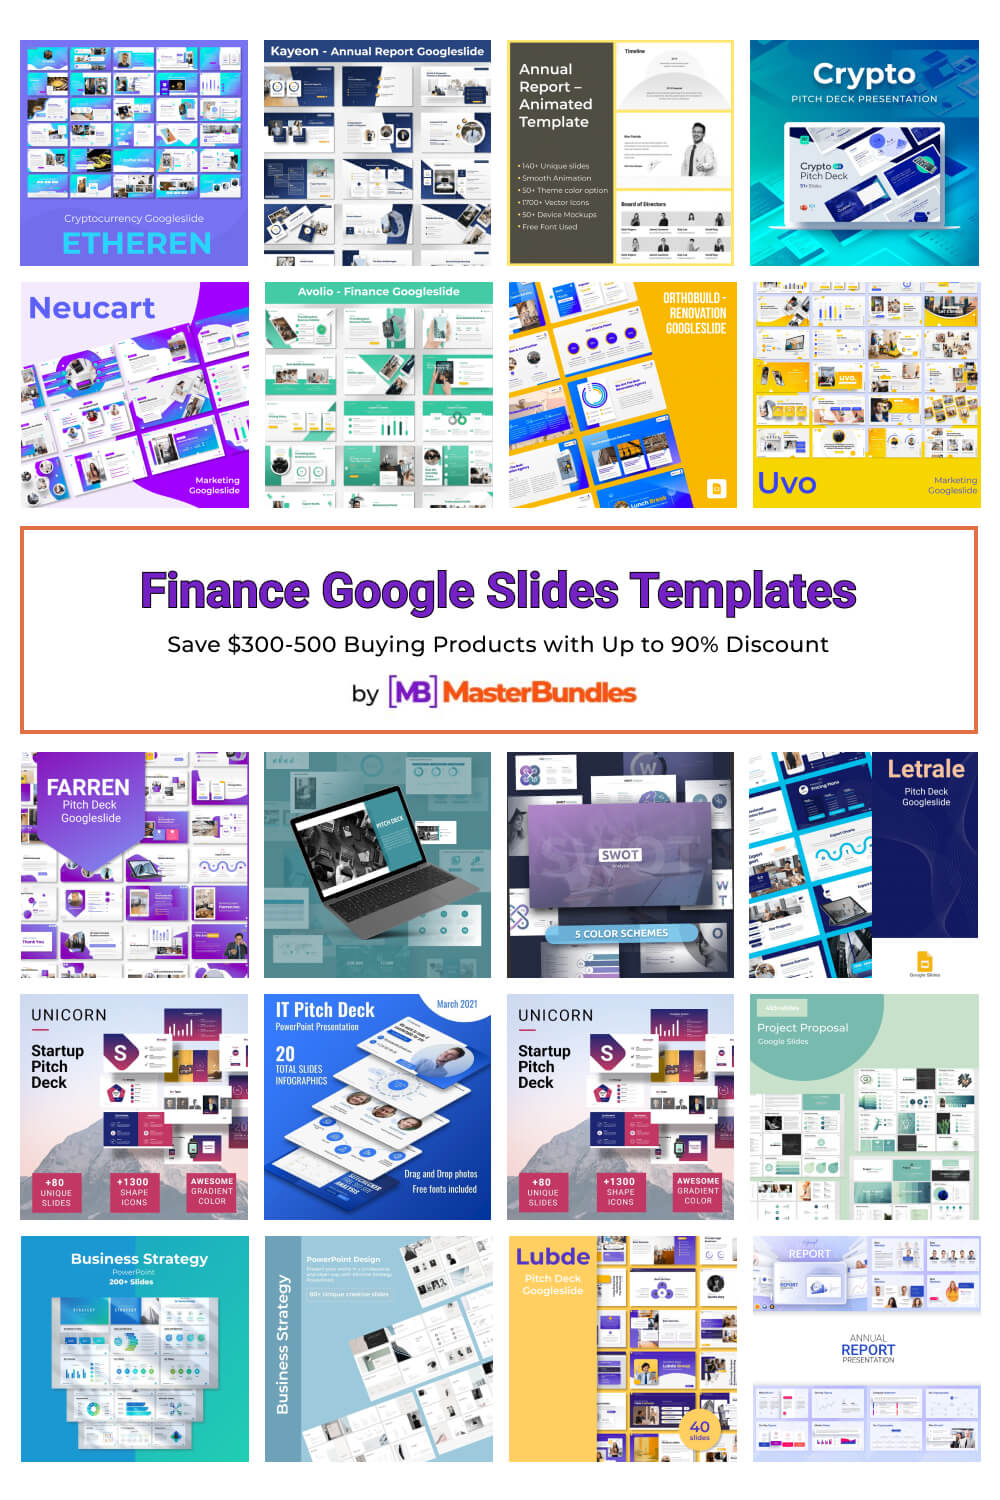 finance google slides templates pinterest image.